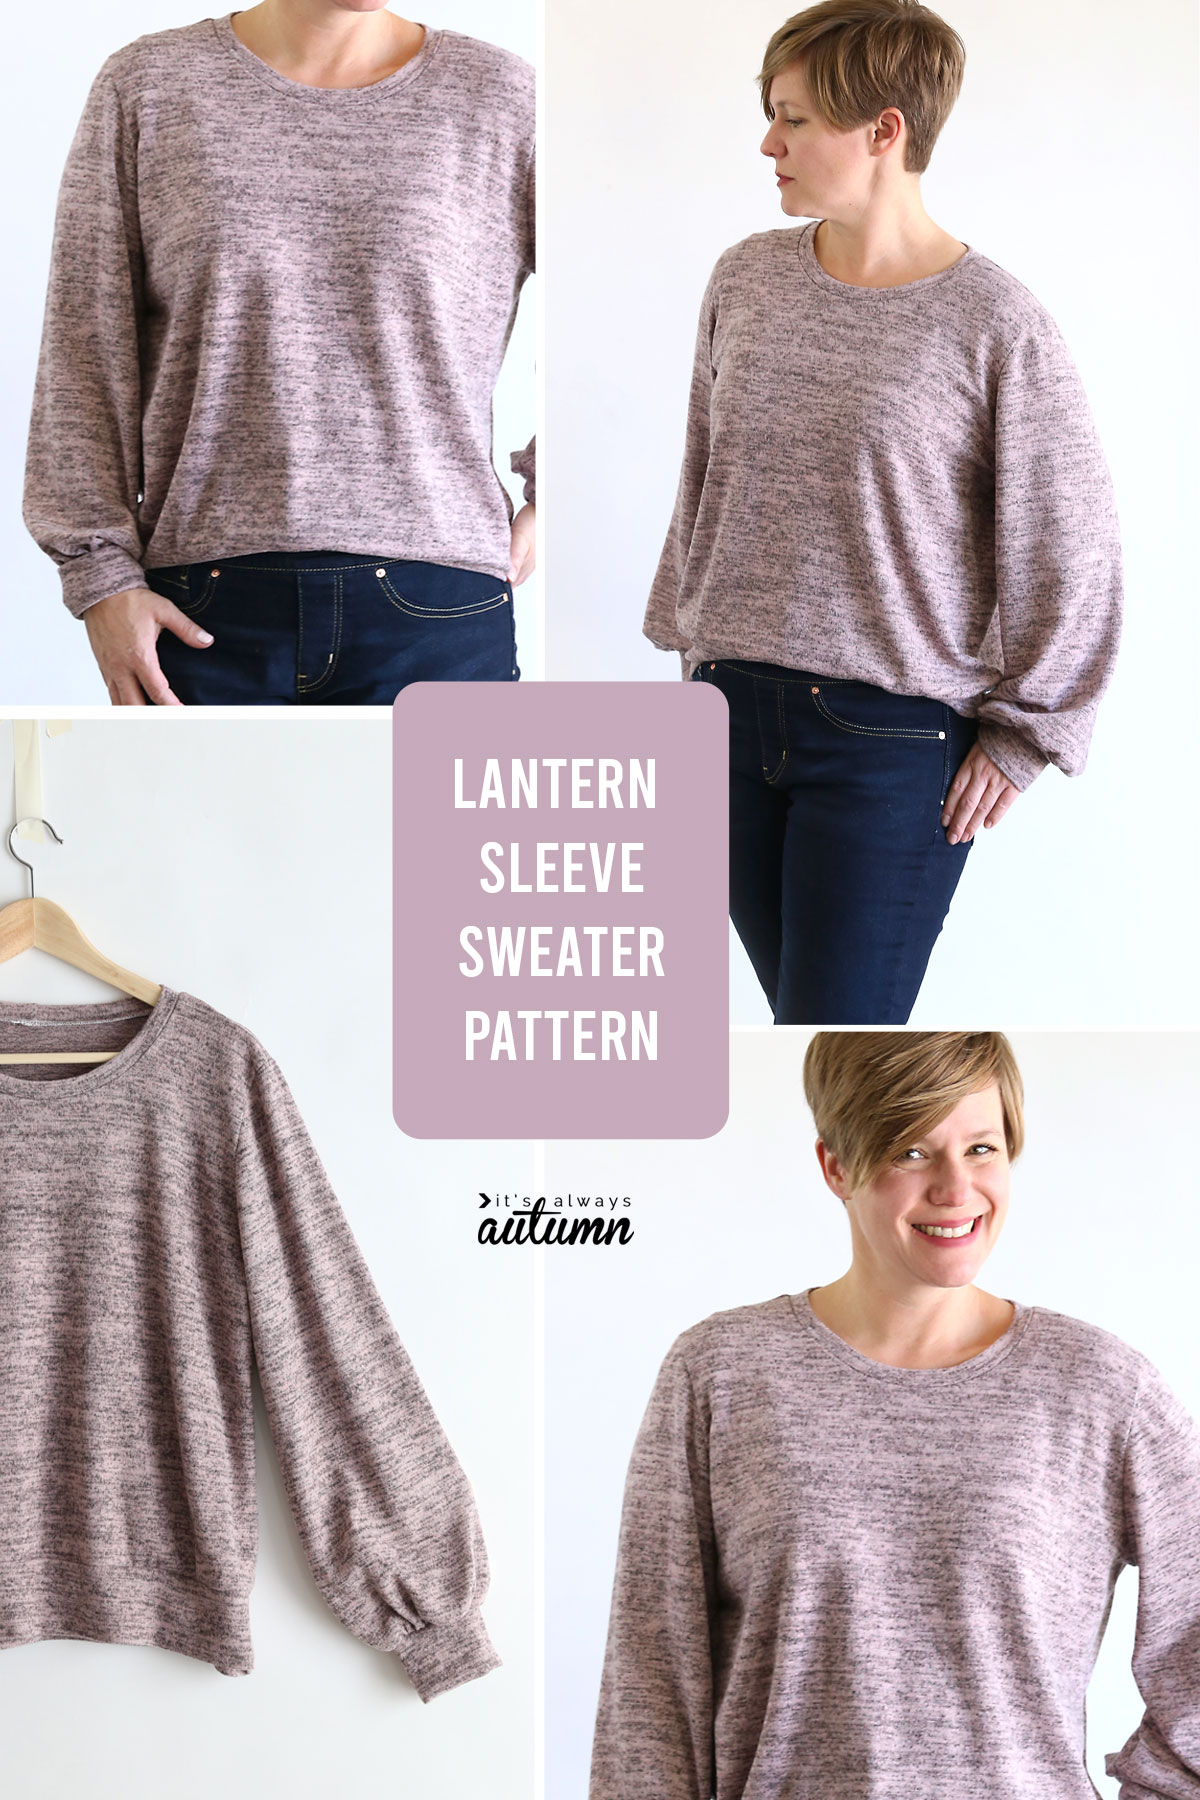 How to Make a Lantern Sleeve Sweater - It's Always Autumn